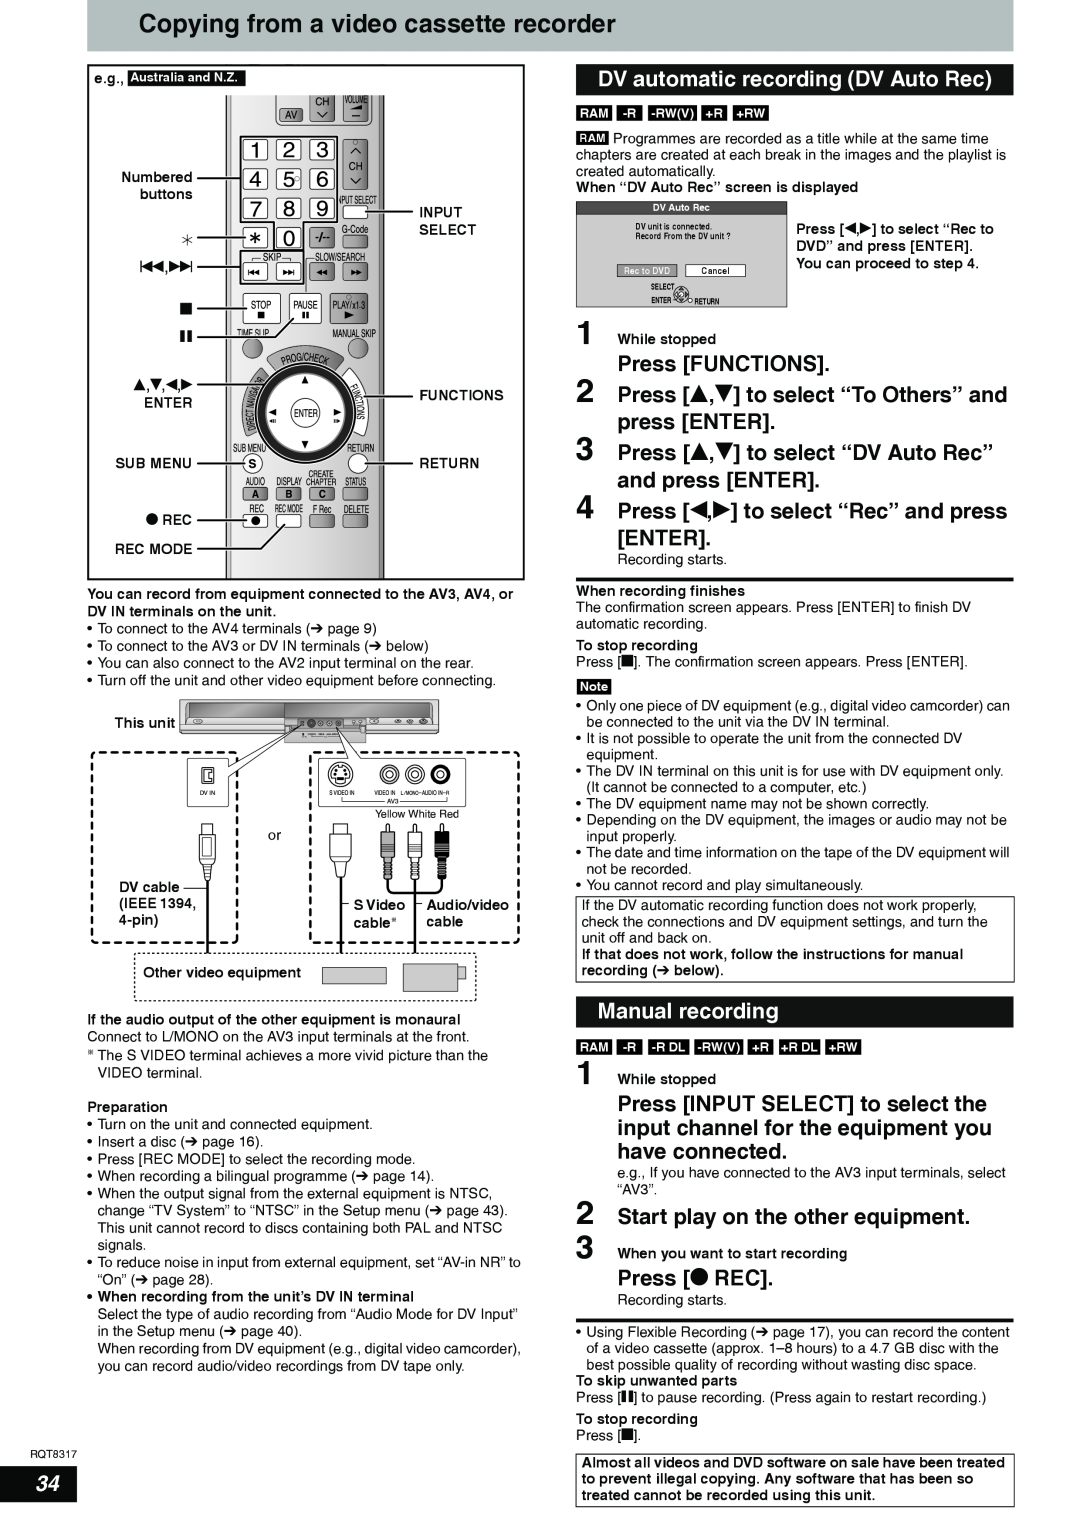 Panasonic DMR-ES15 Copying from a video cassette recorder, DV automatic recording DV Auto Rec, Manual recording, Enter 